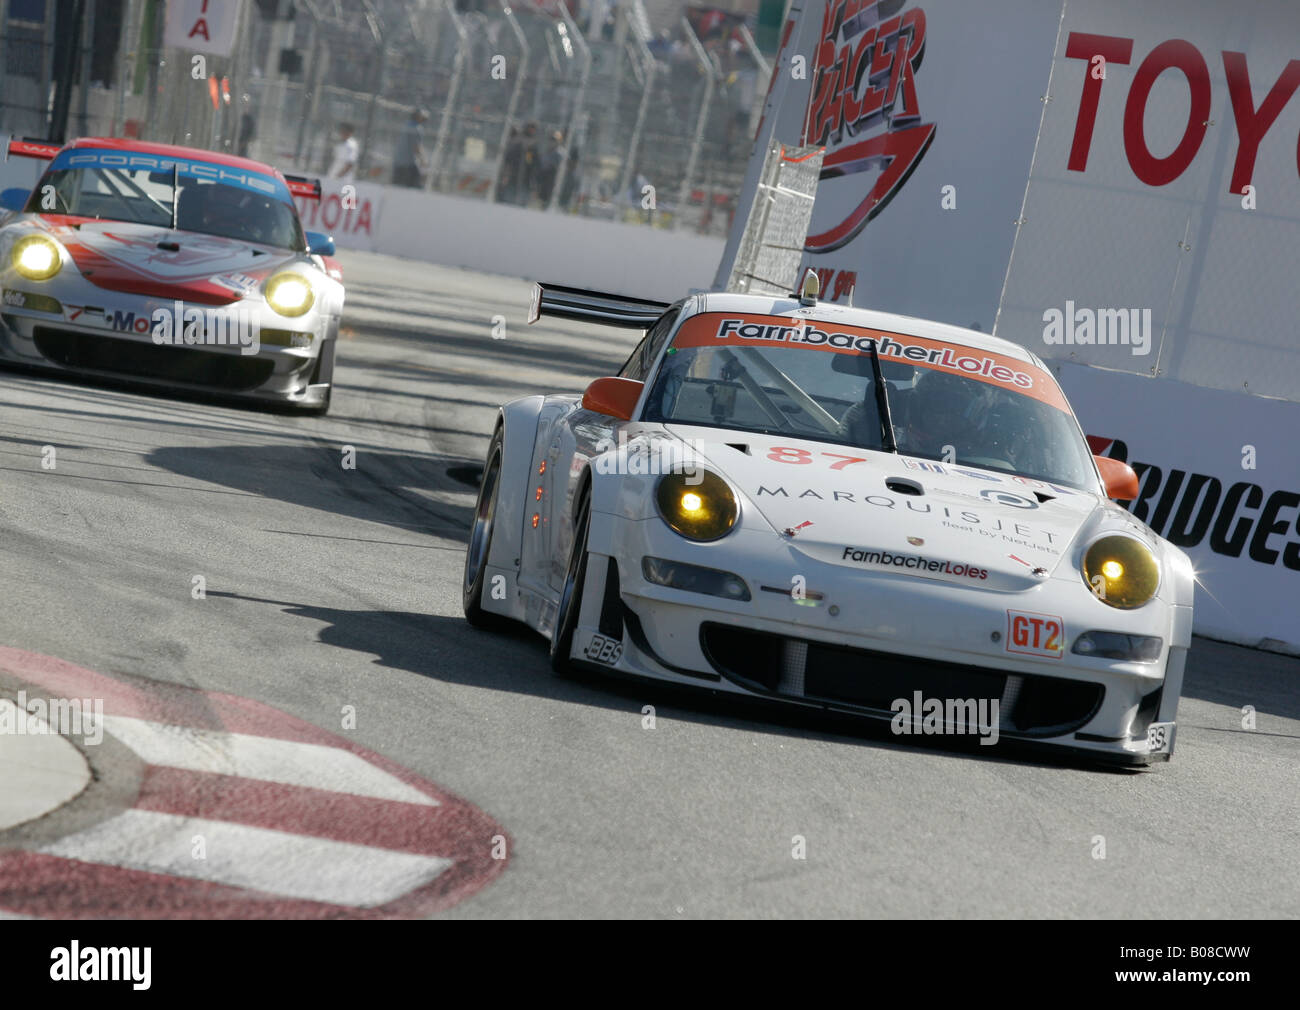 GT2-Klasse racing Porsche im Wettbewerb der American Le Mans Series in Long Beach, Kalifornien Stockfoto